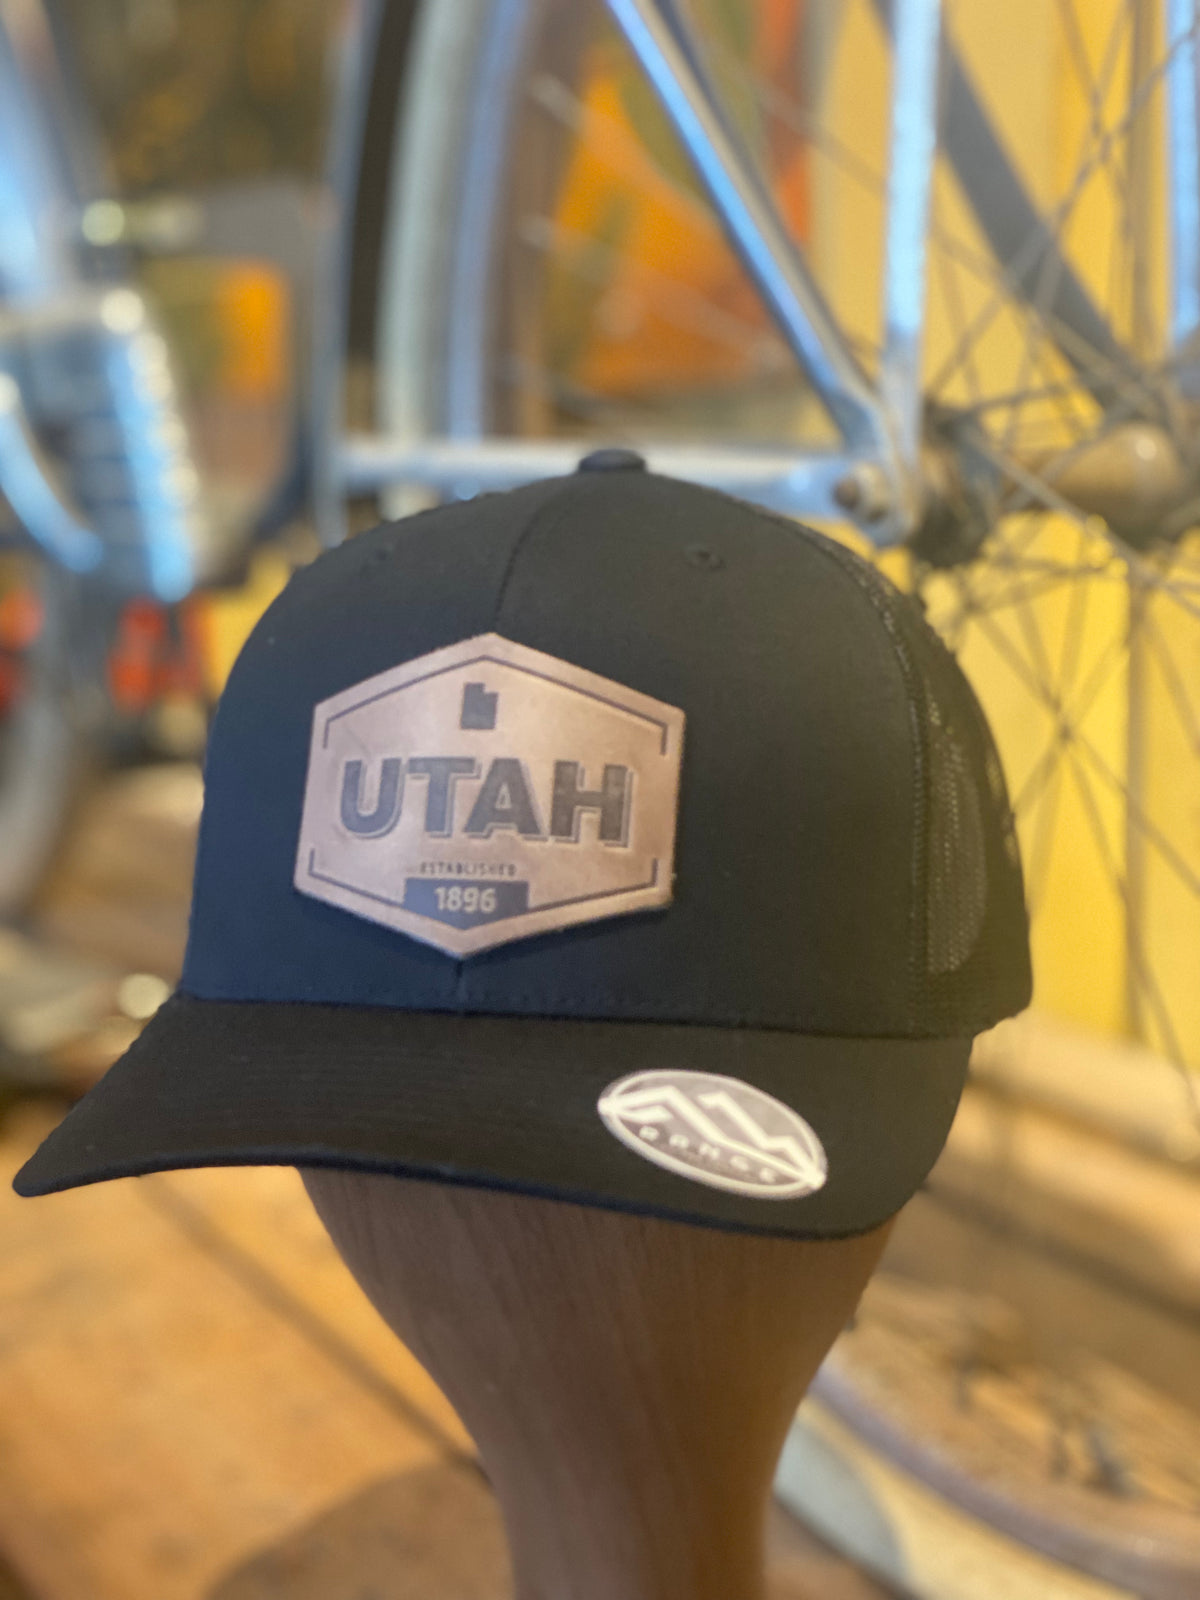 Utah Snapback Hat